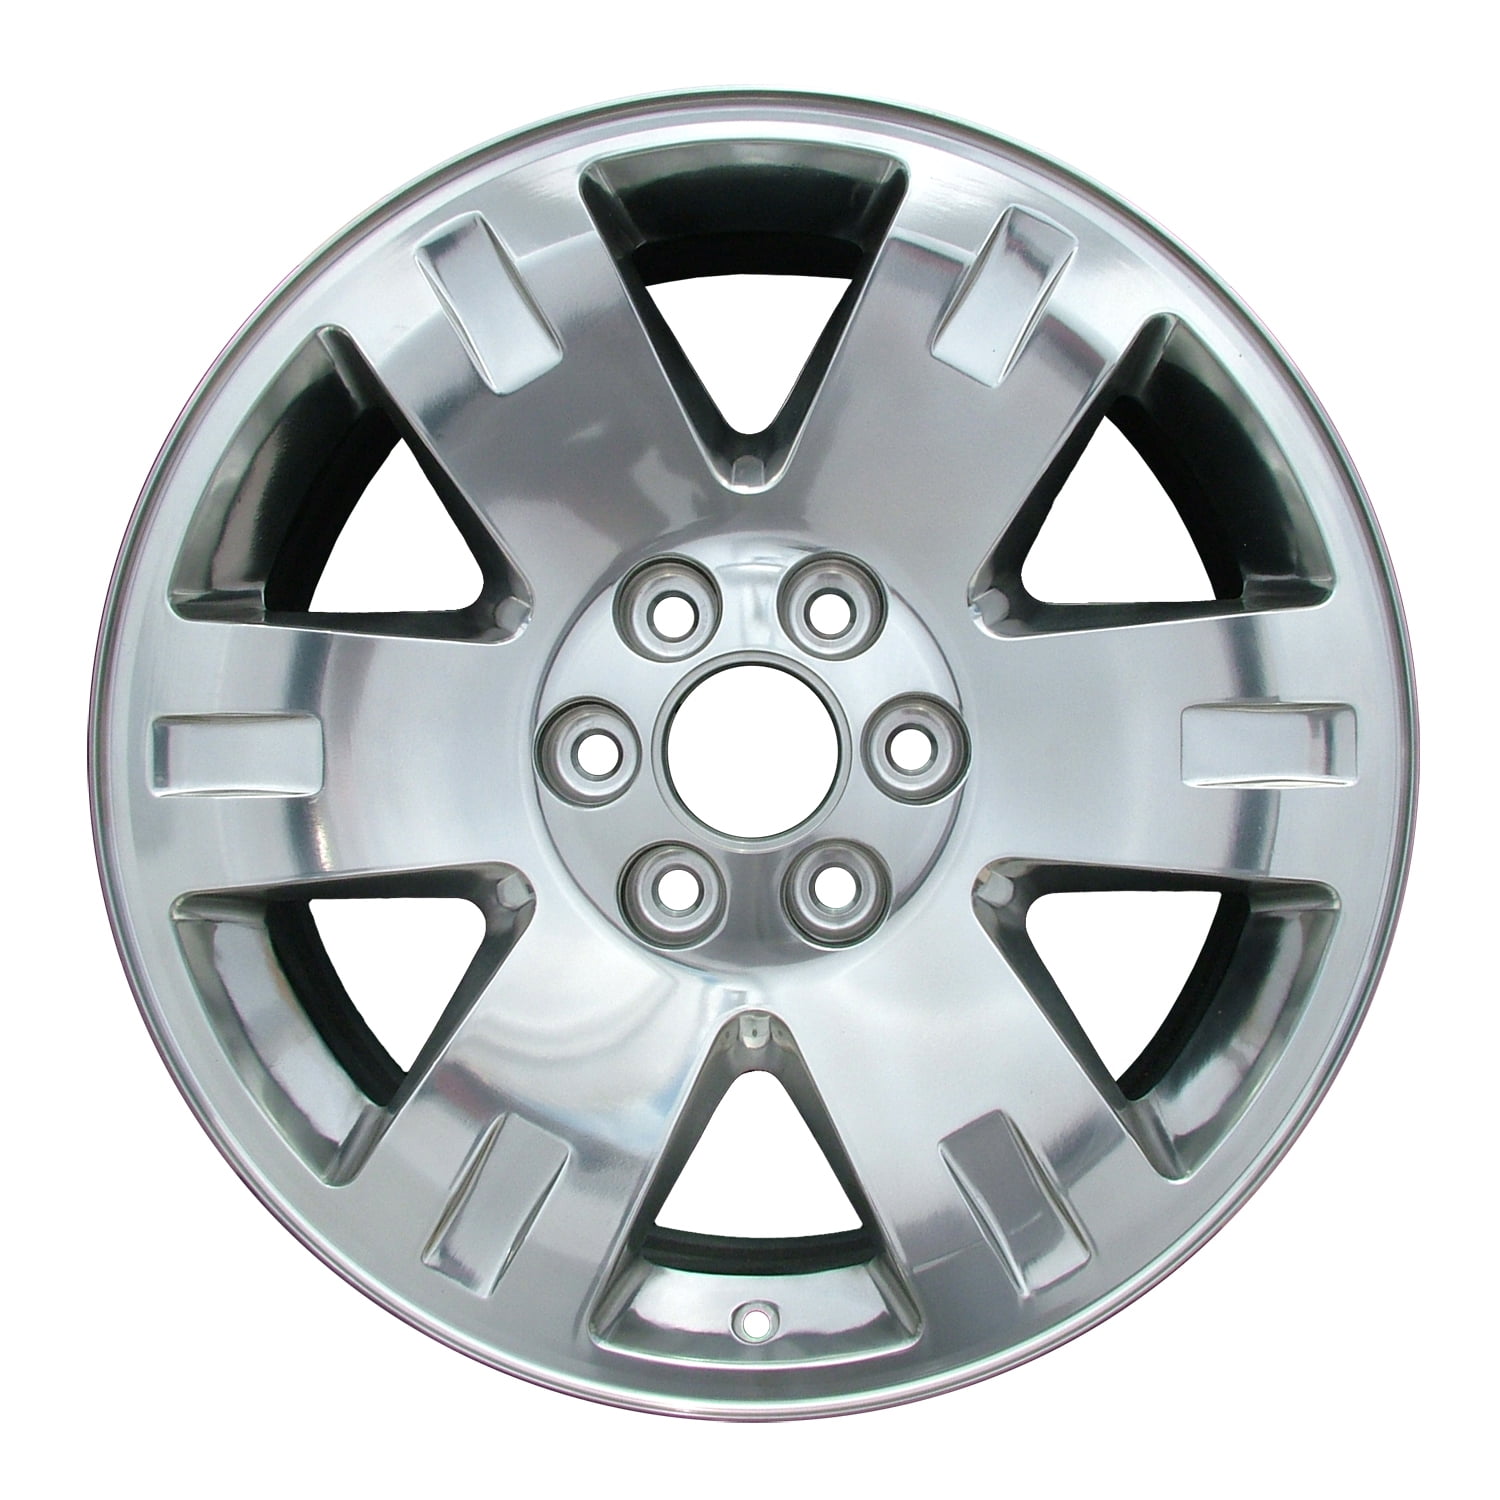 2007-2014 GMC Sierra 1500 20x8.5 Aluminum Alloy Wheel, Rim Polished Full Face - 5306 - Walmart Tires For A 2014 Gmc Sierra 1500